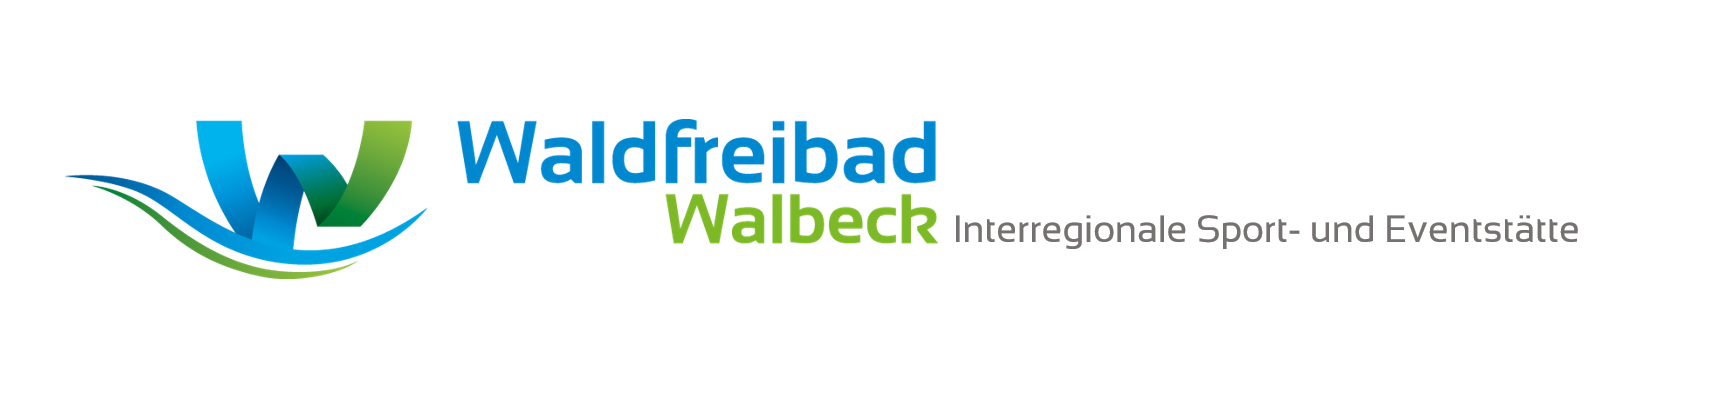 Waldfreibad Walbeck